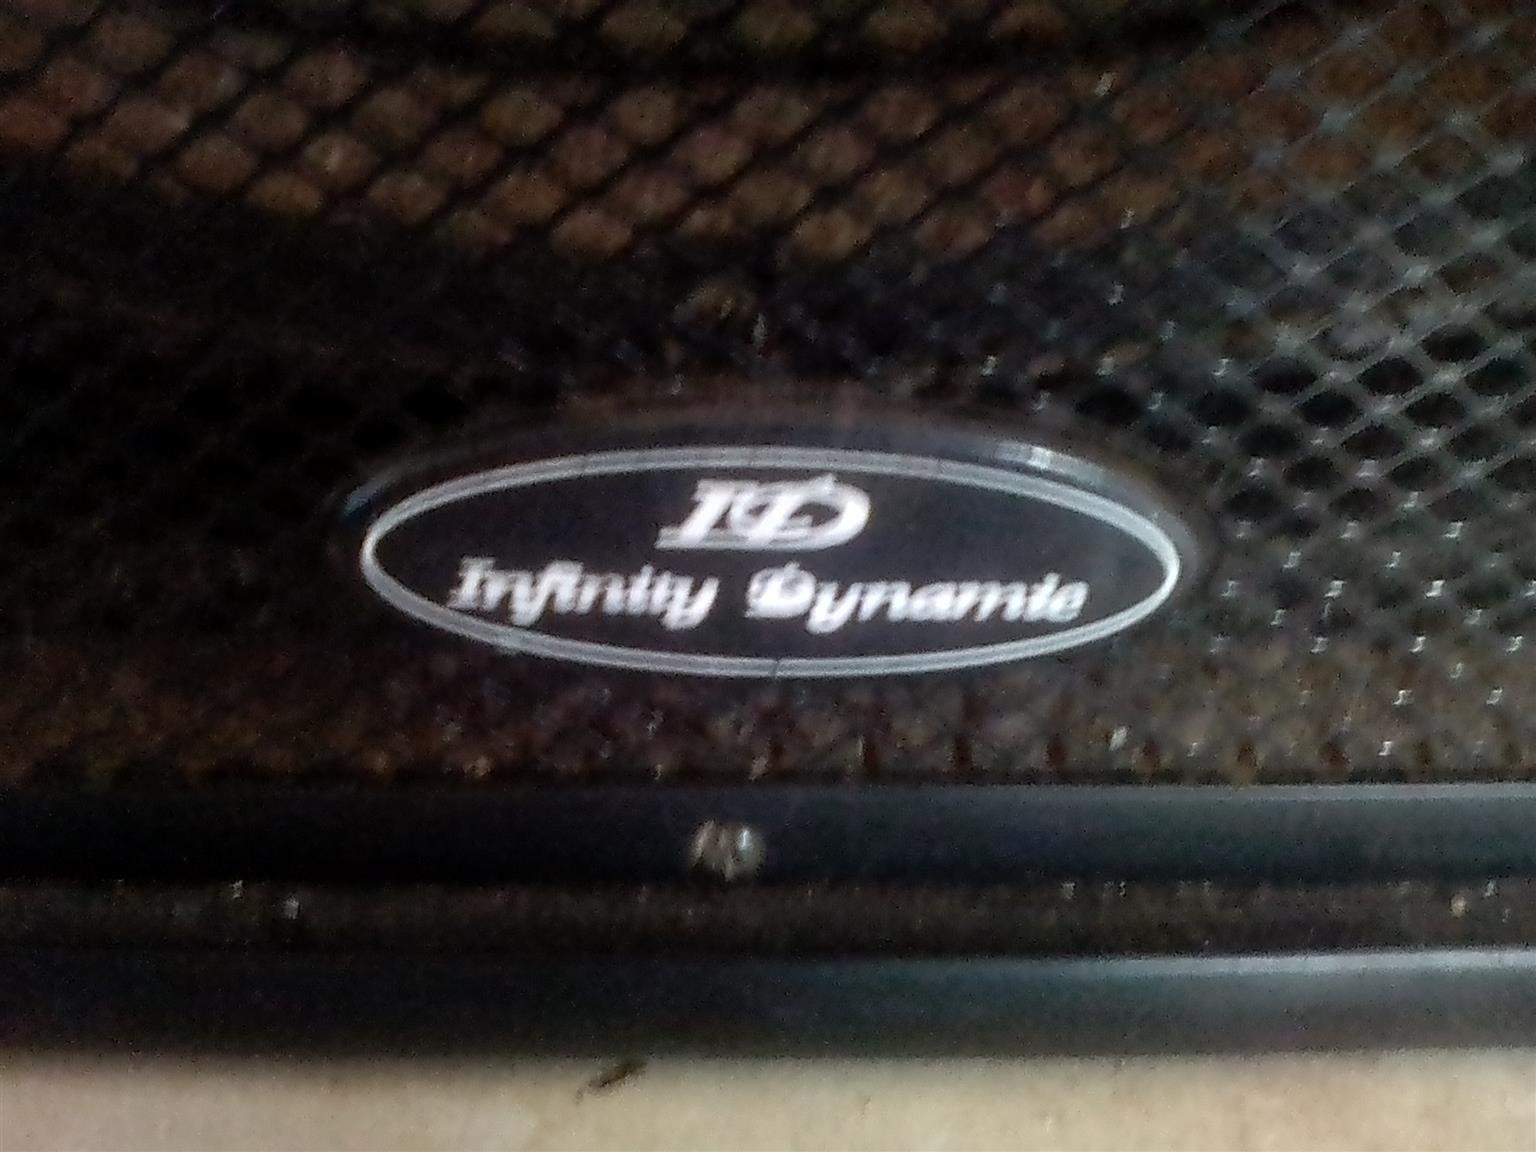 Infinity dynamics 15 speakers